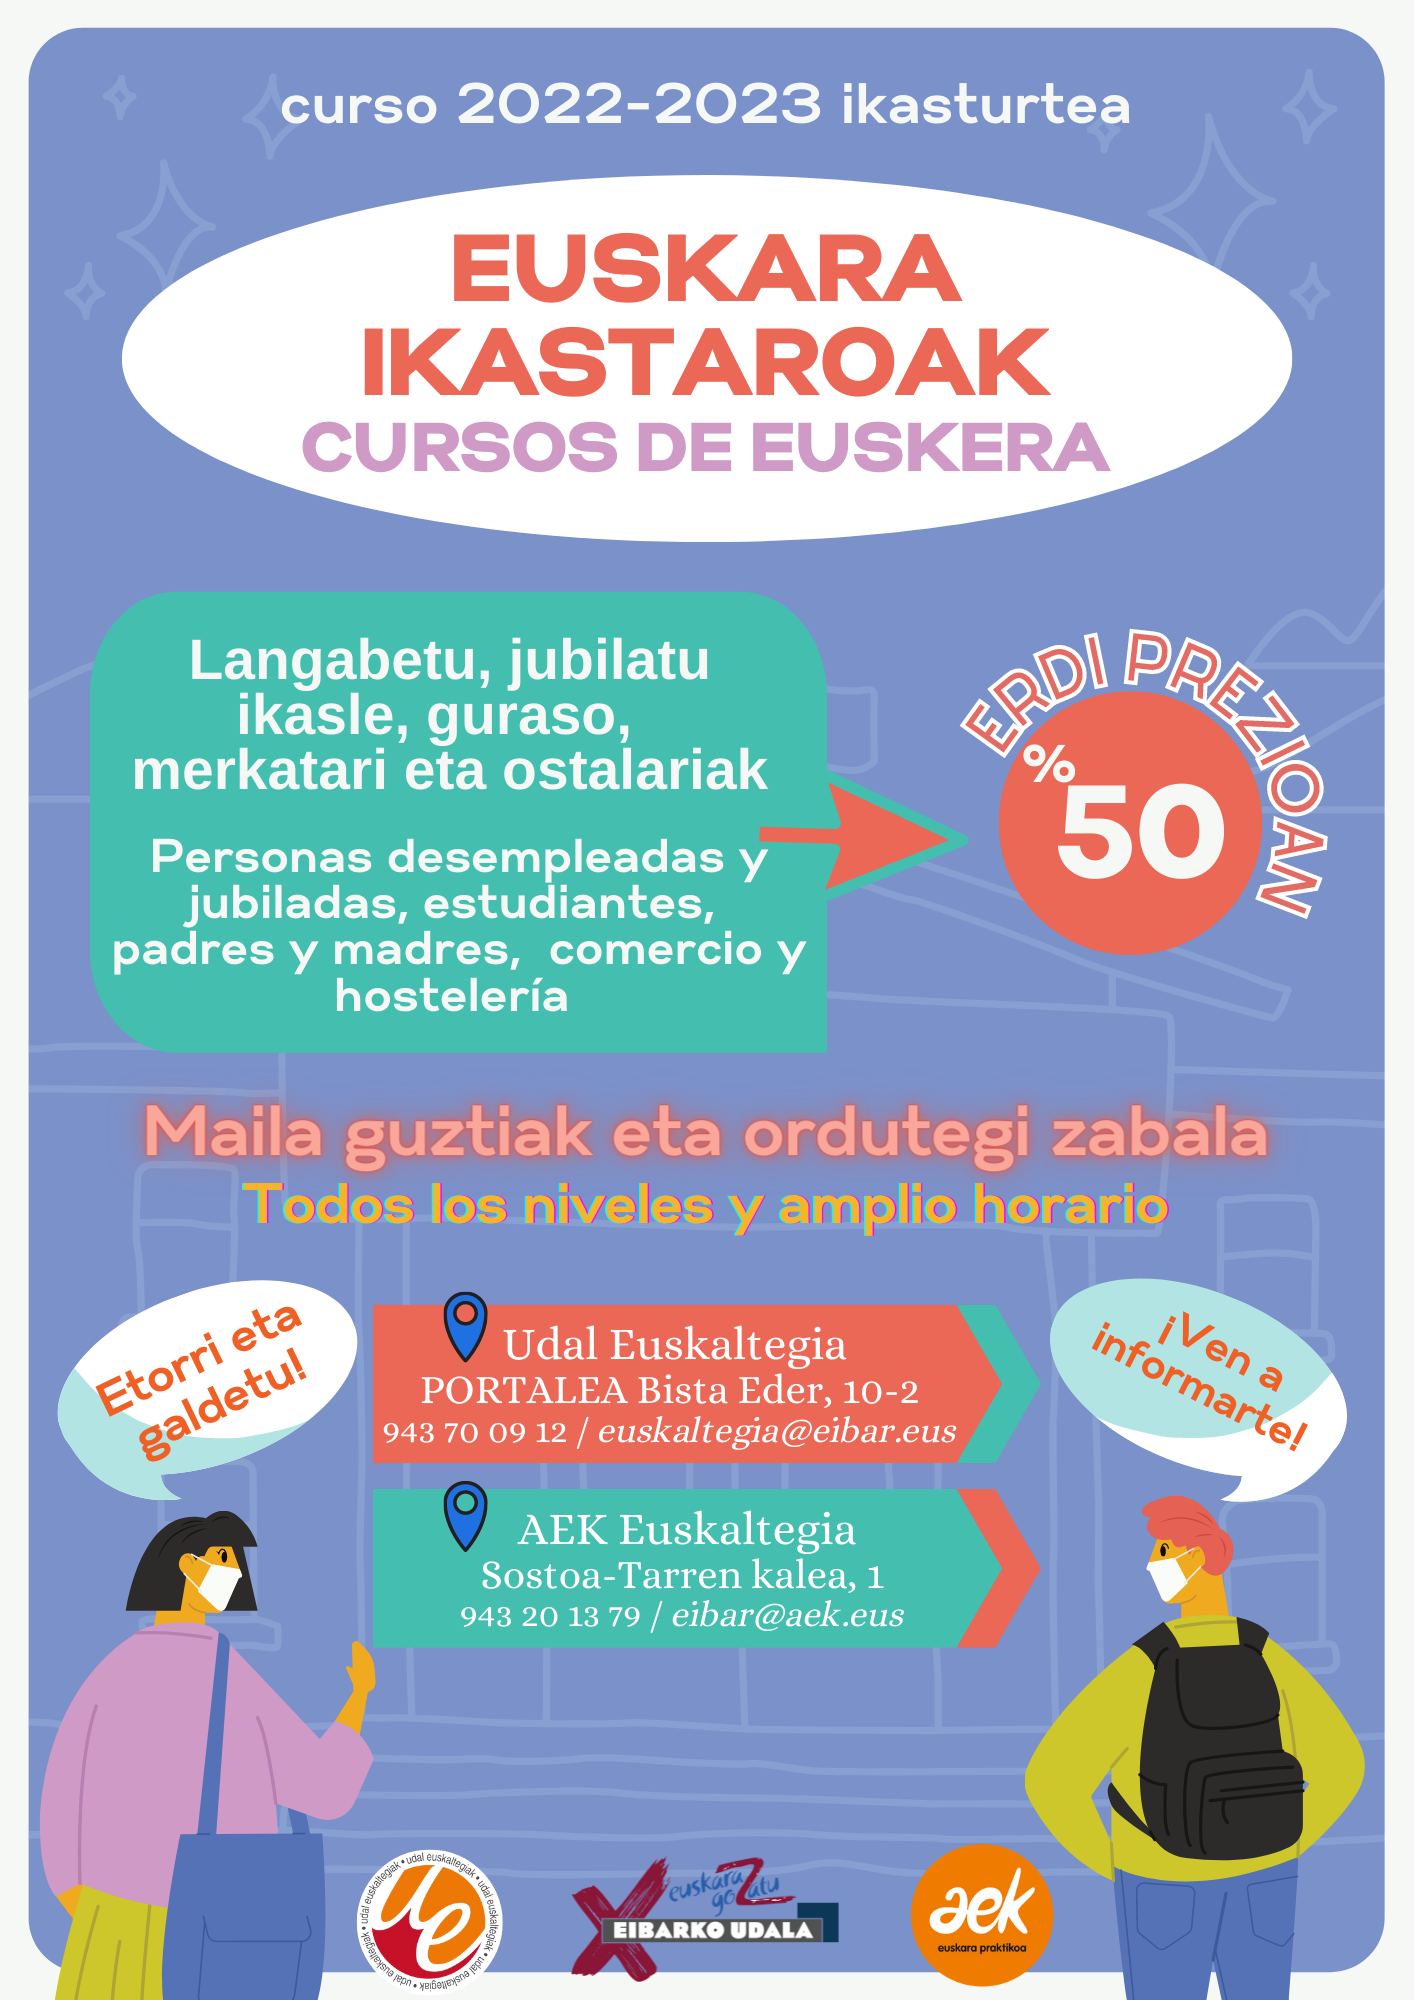 Campaña especial de euskaldunización en el Euskaltegi Municipal y AEK de Eibar